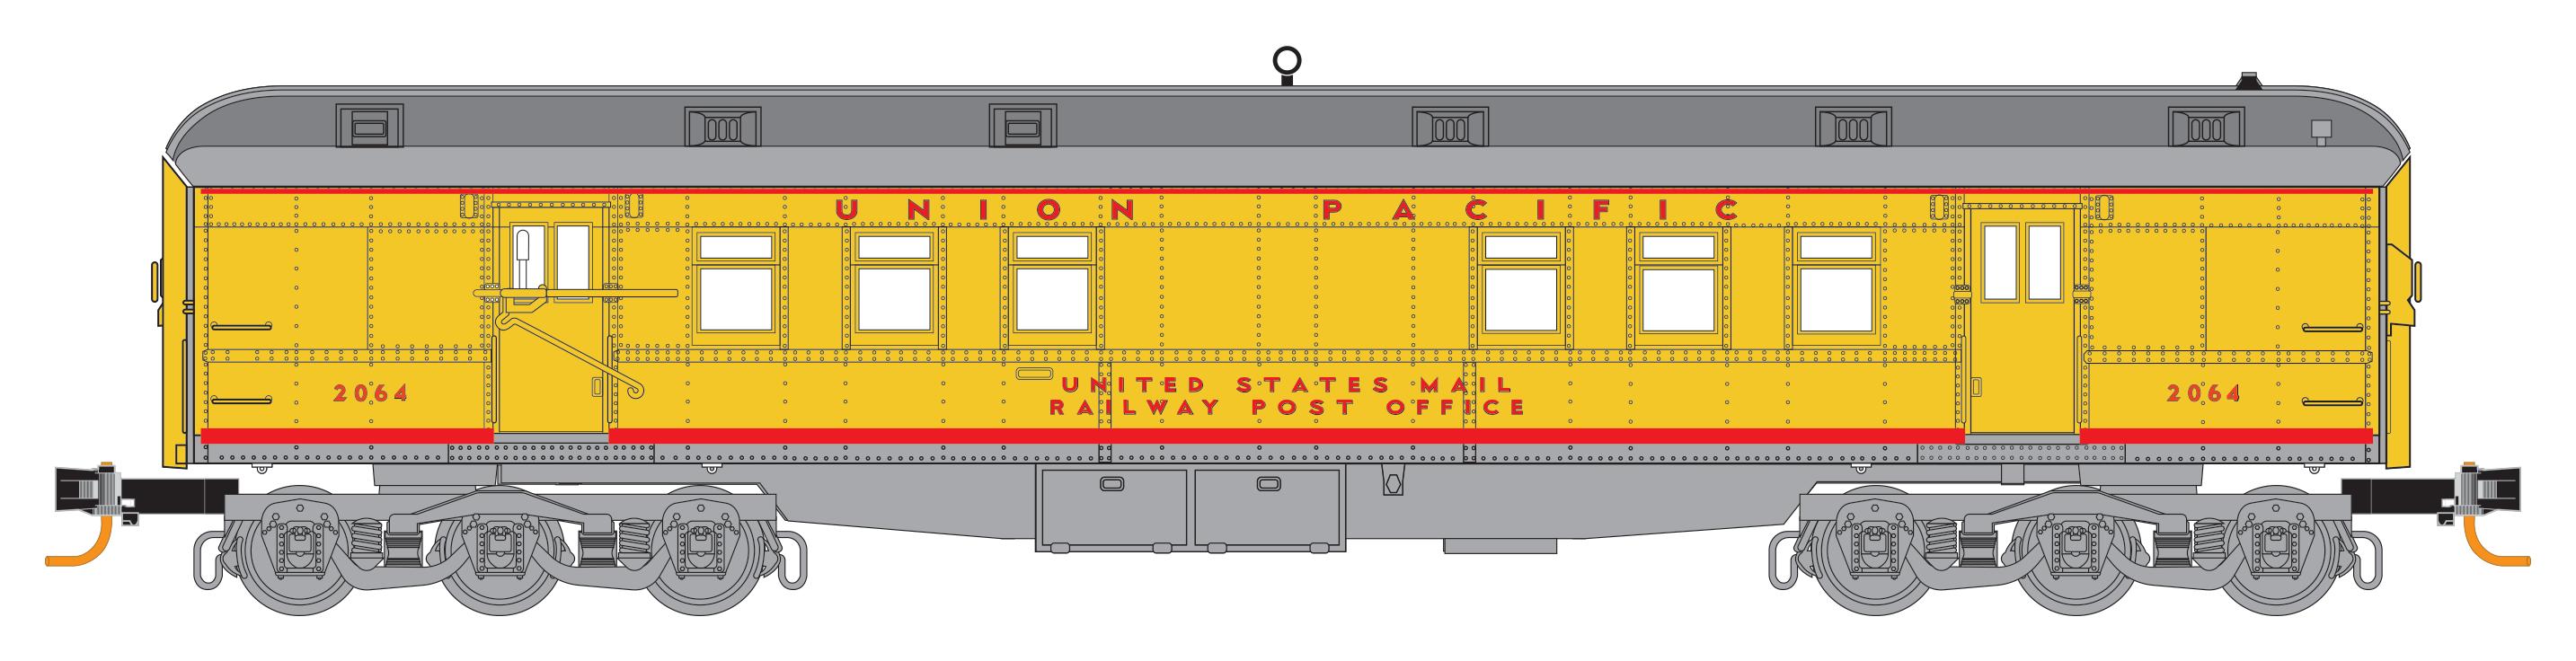 MTL Micro-Trains 101040 Union Pacific UP 518250